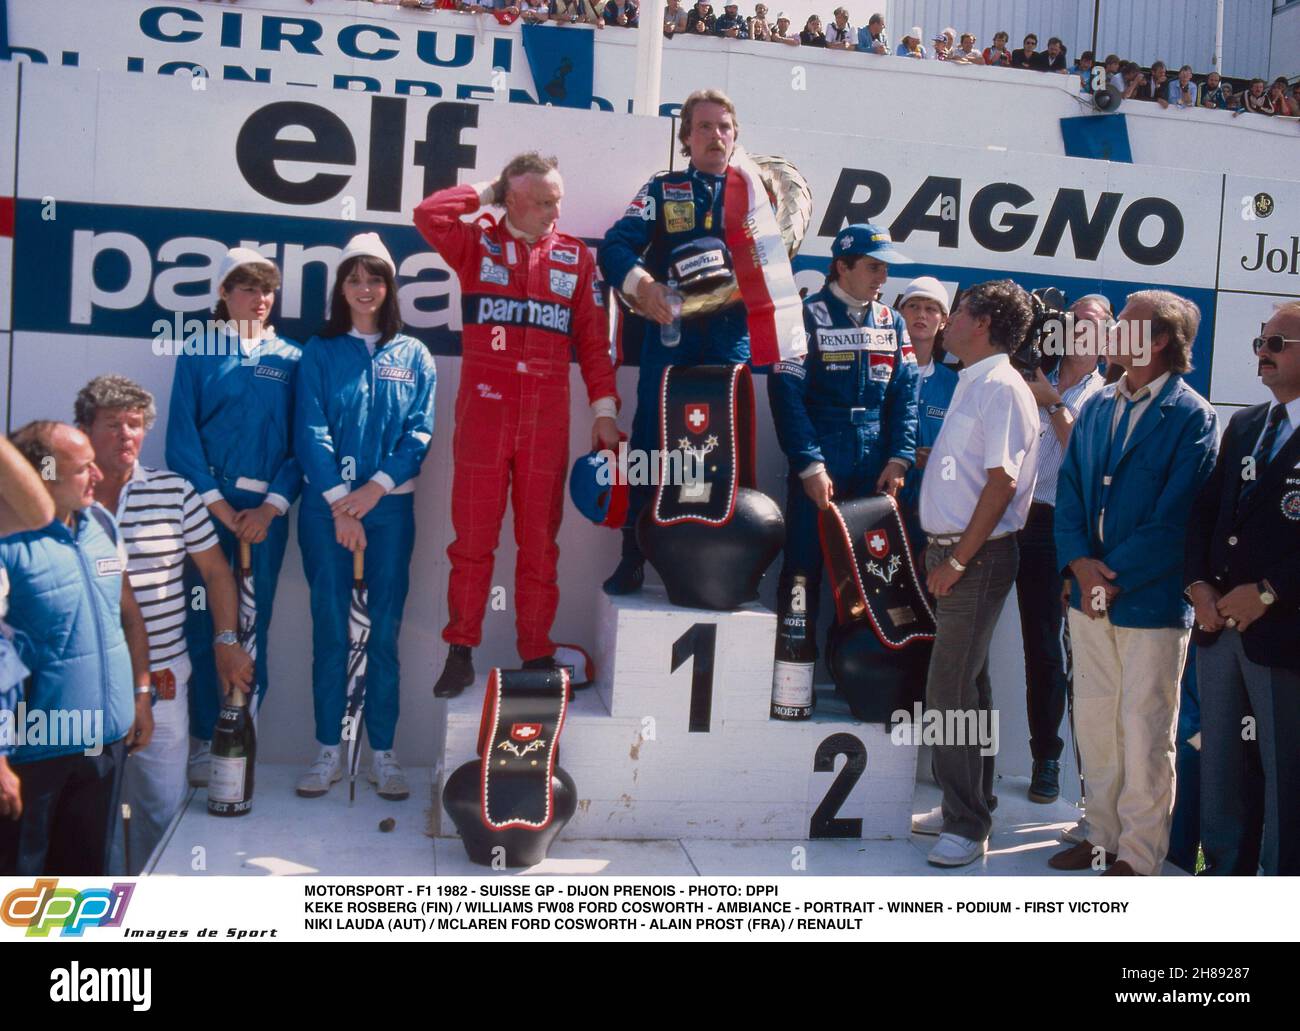 The podium of the Swiss Grand Prix in Dijon on 29 August 1982 with Keke Rosberg, Williams, Alain Prost, Renault, Niki Lauda, McLaren Ford.